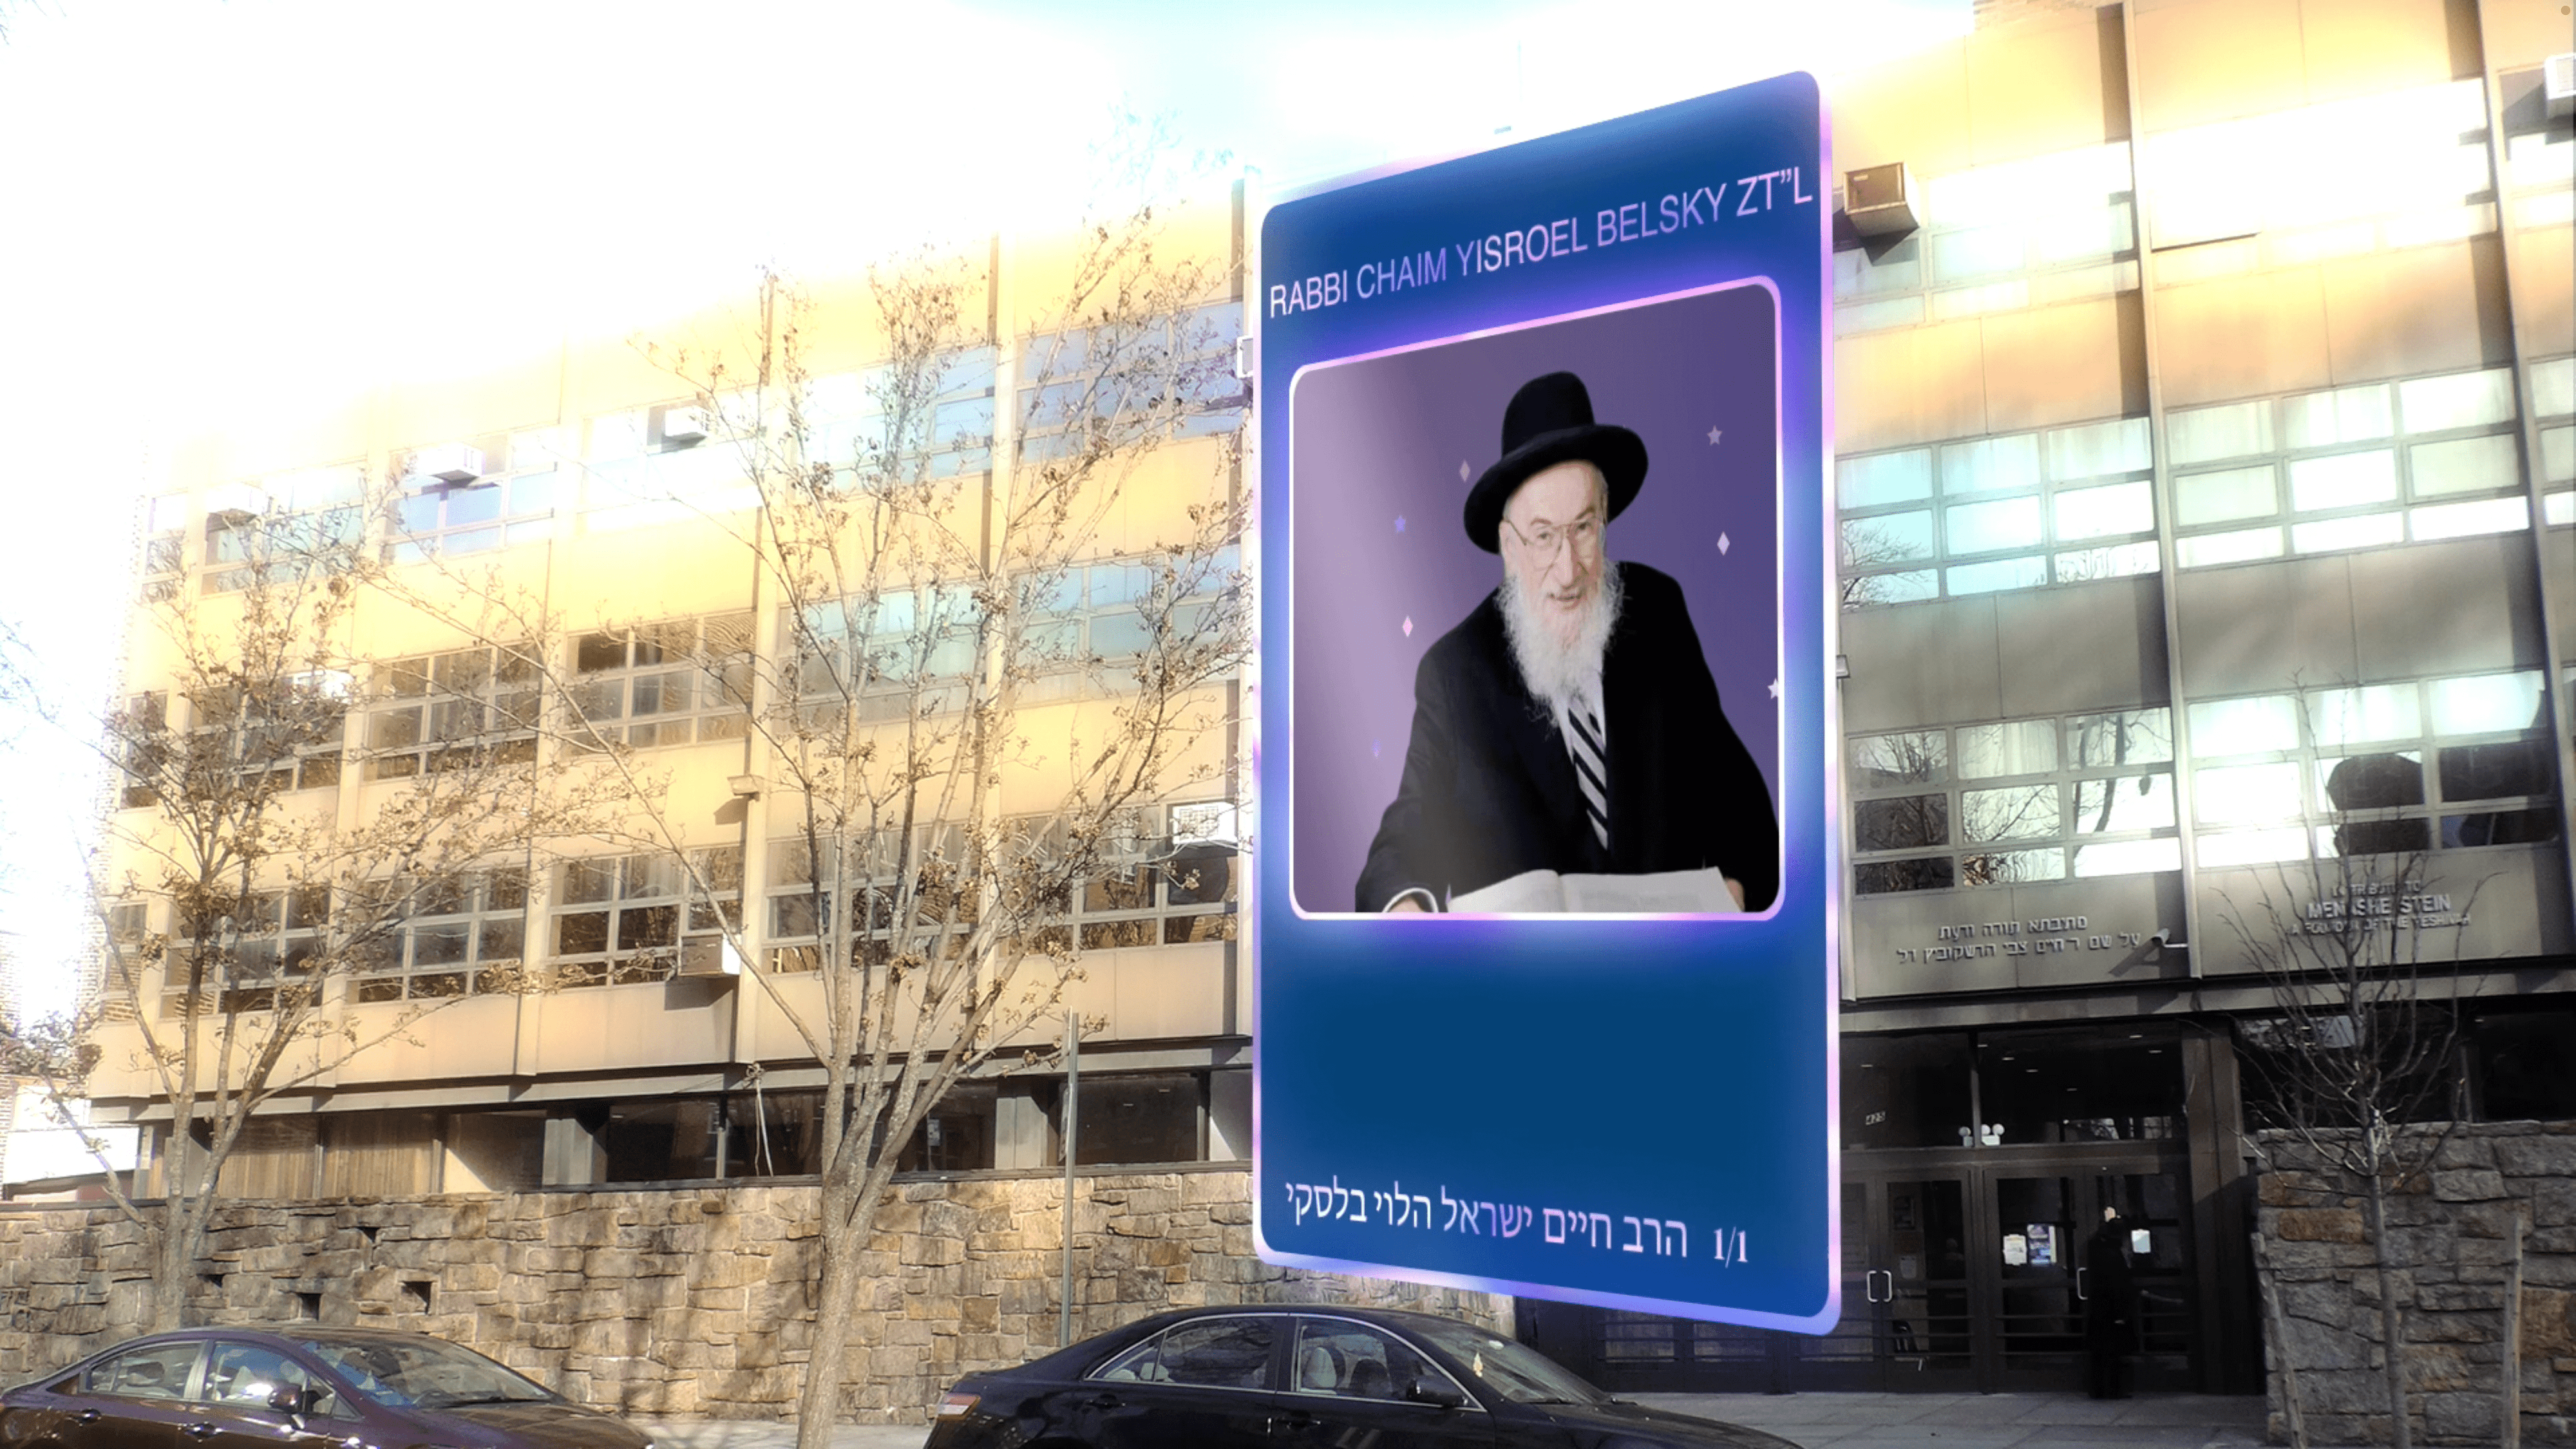 Rabbi Chaim Yisroel Belsky